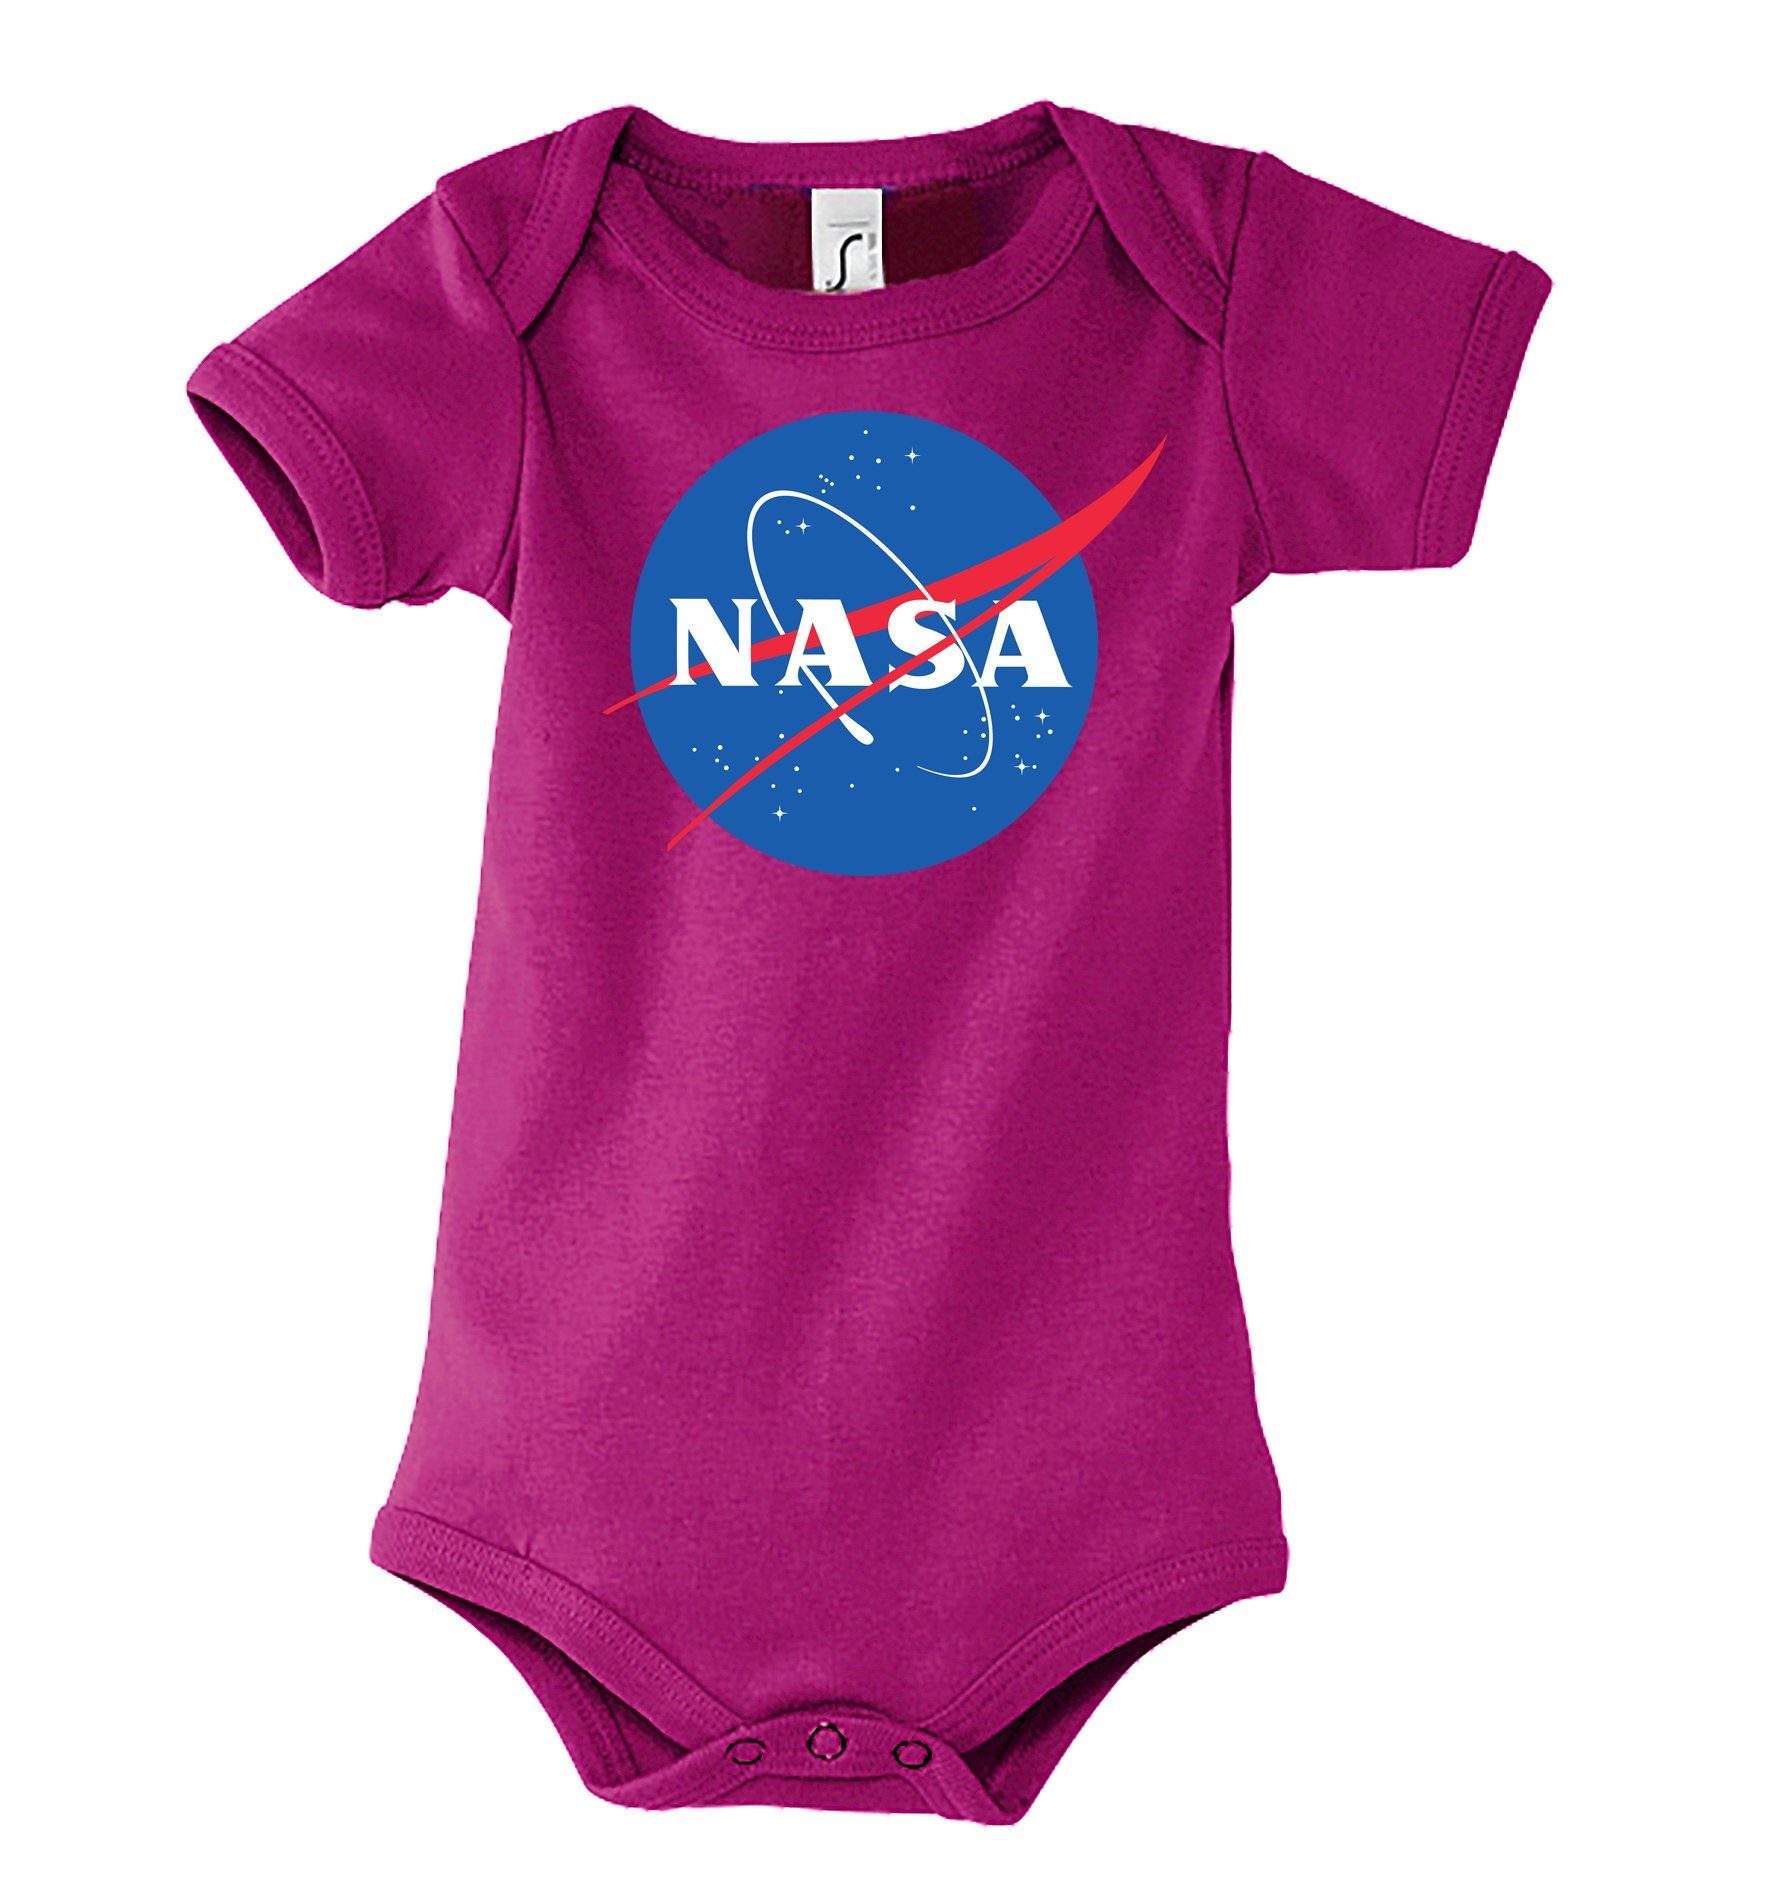 niedlichem Frontprint Designz mit Strampler Kurzarmbody Body Baby Fuchsia Youth NASA